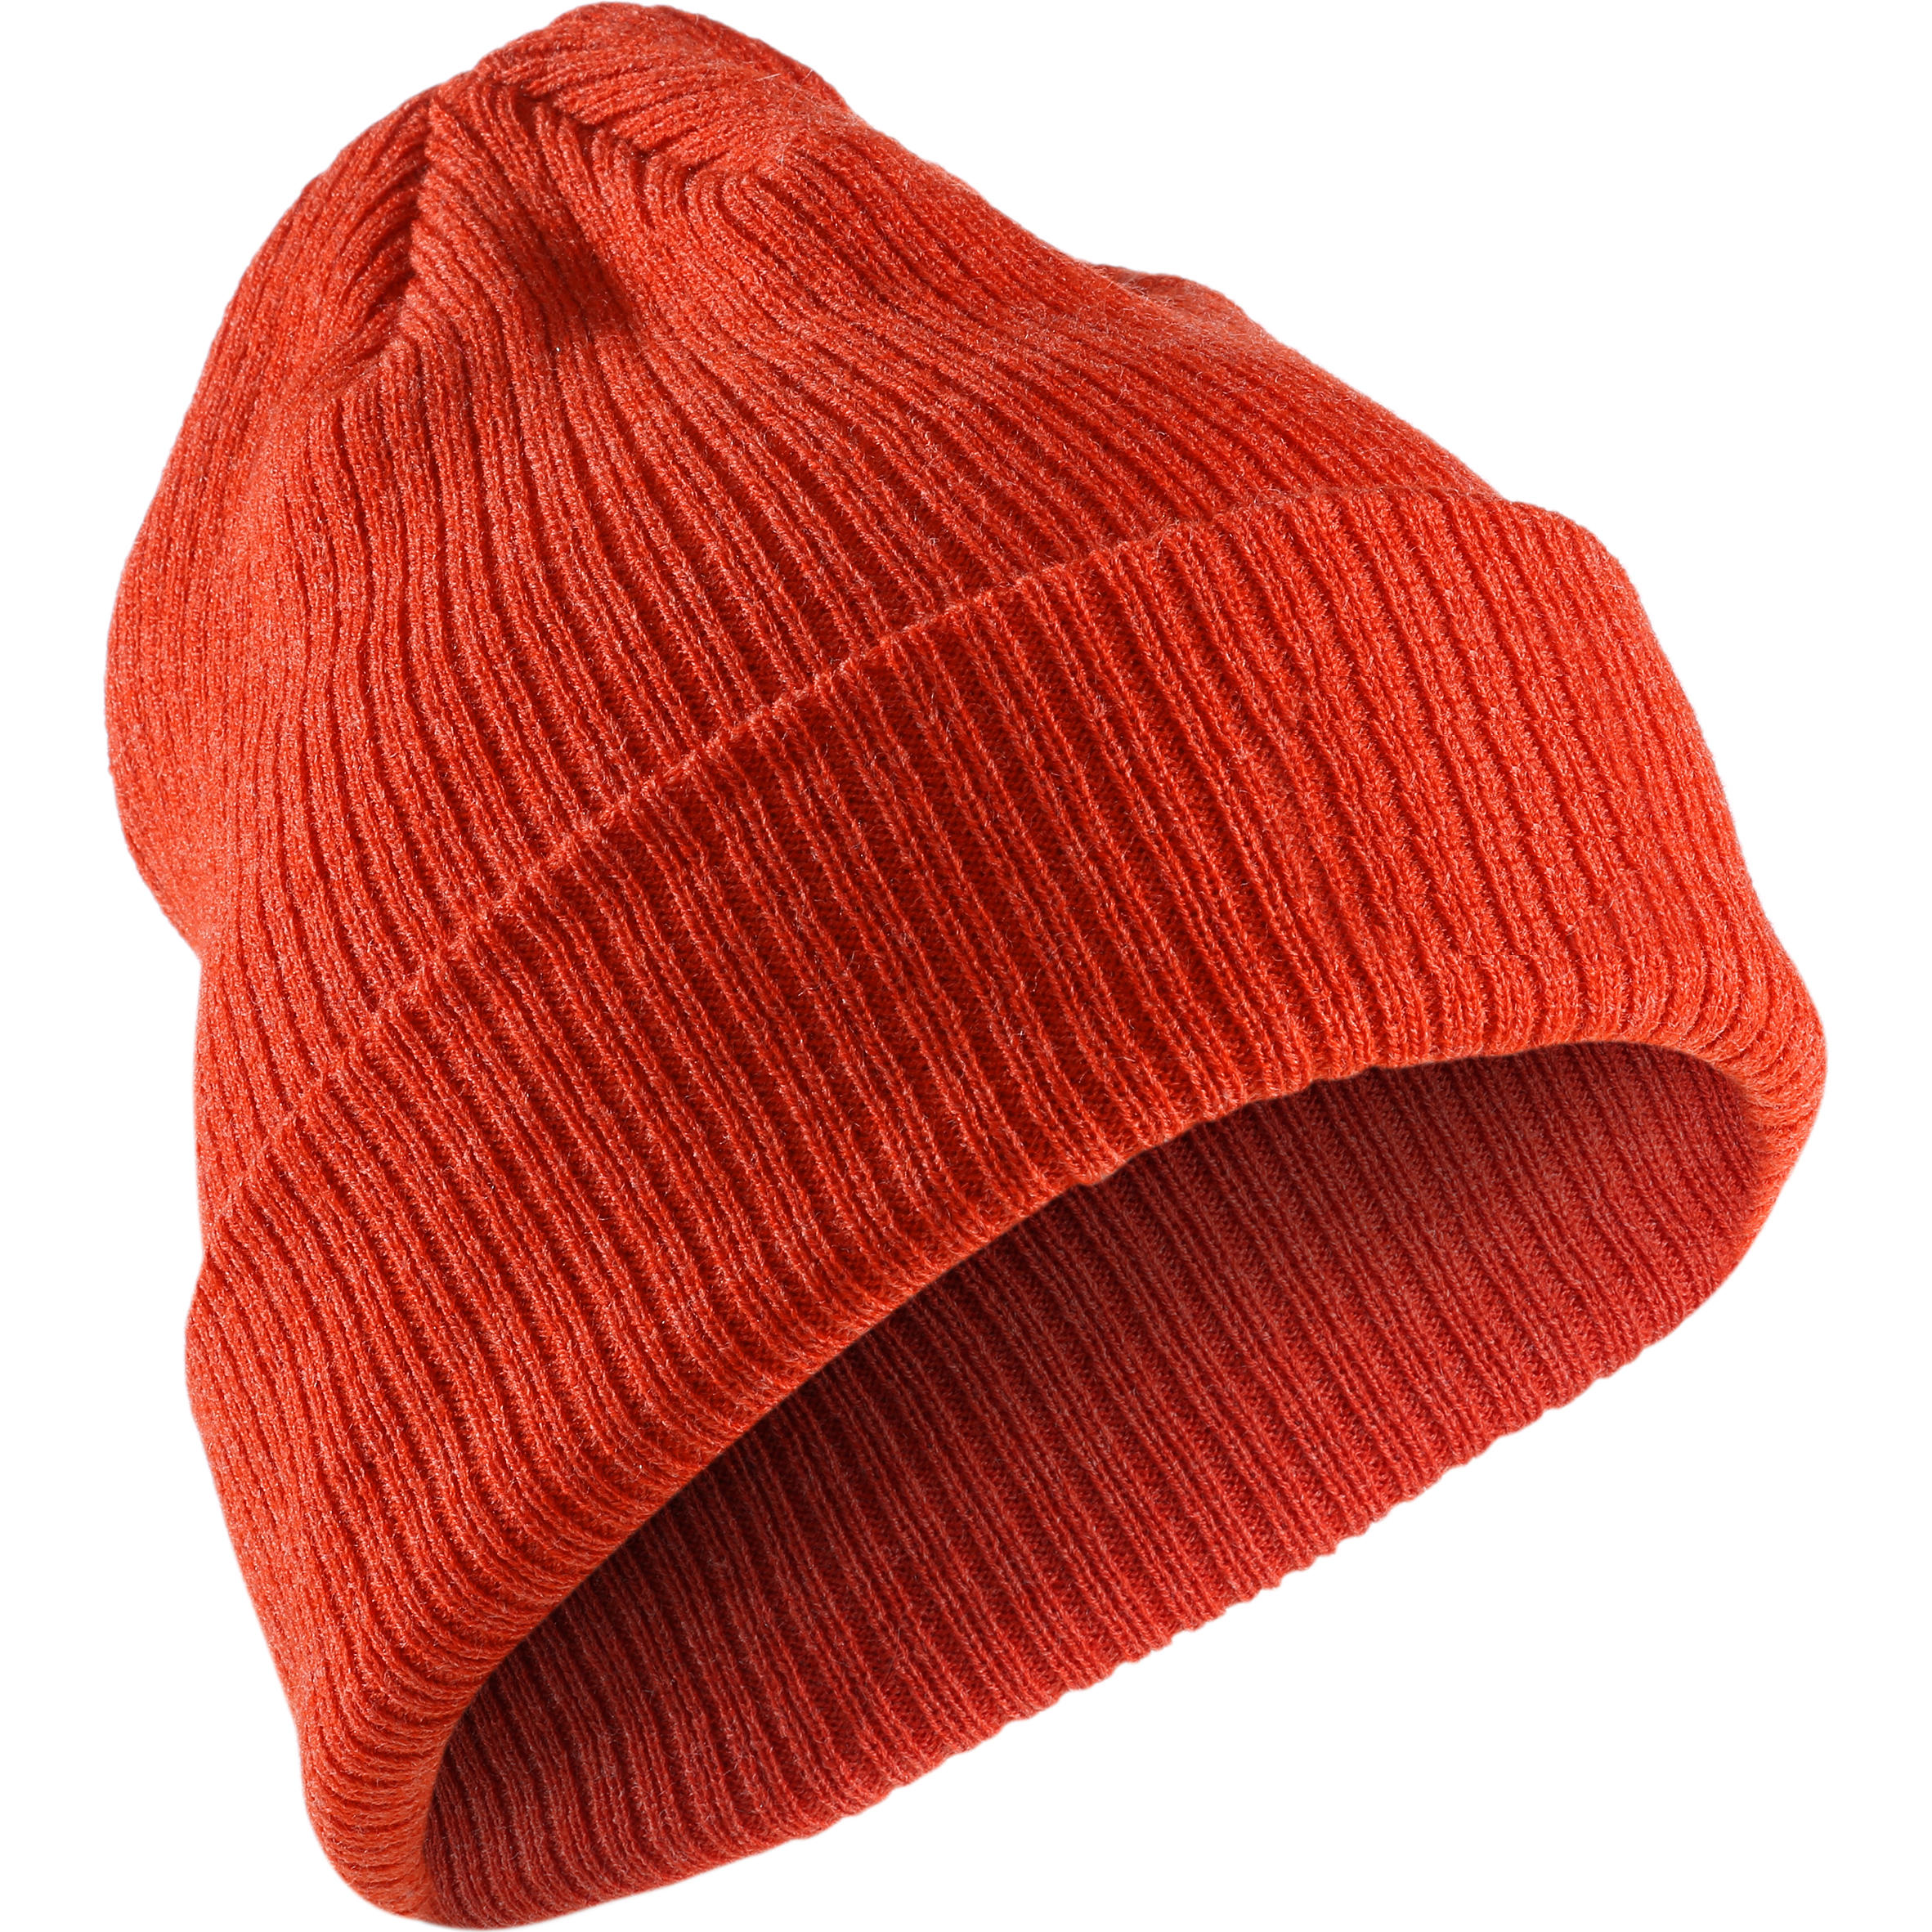 WEDZE Fisherman Ski Hat - Orange